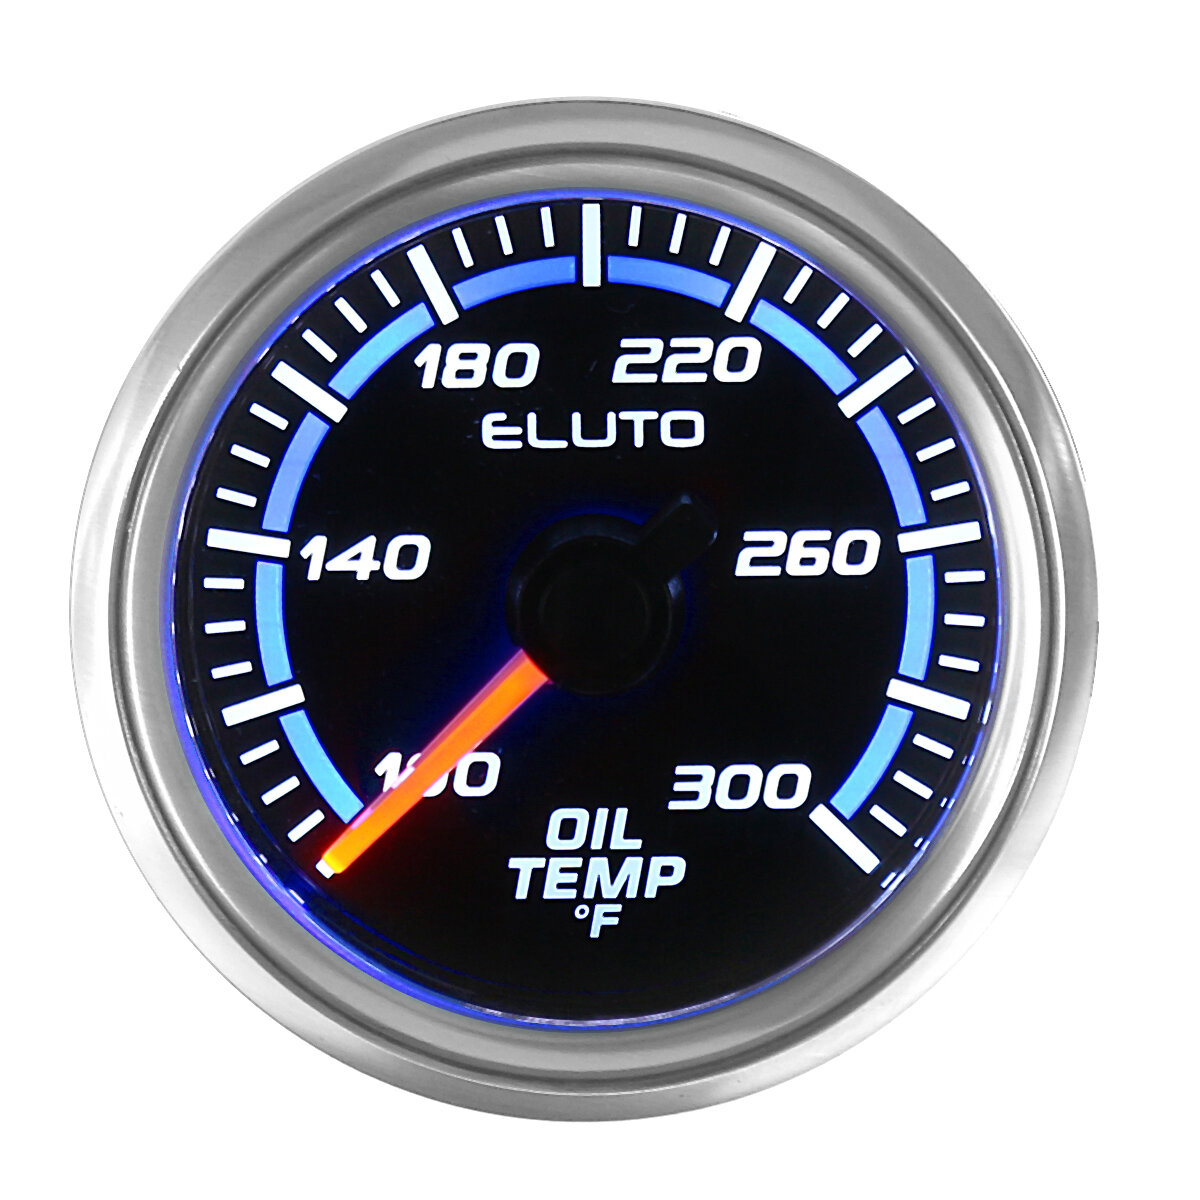 Oil Temperature Gauge 2Inch 52mm LED 100-300°F 7 Color Black Face Car Meter